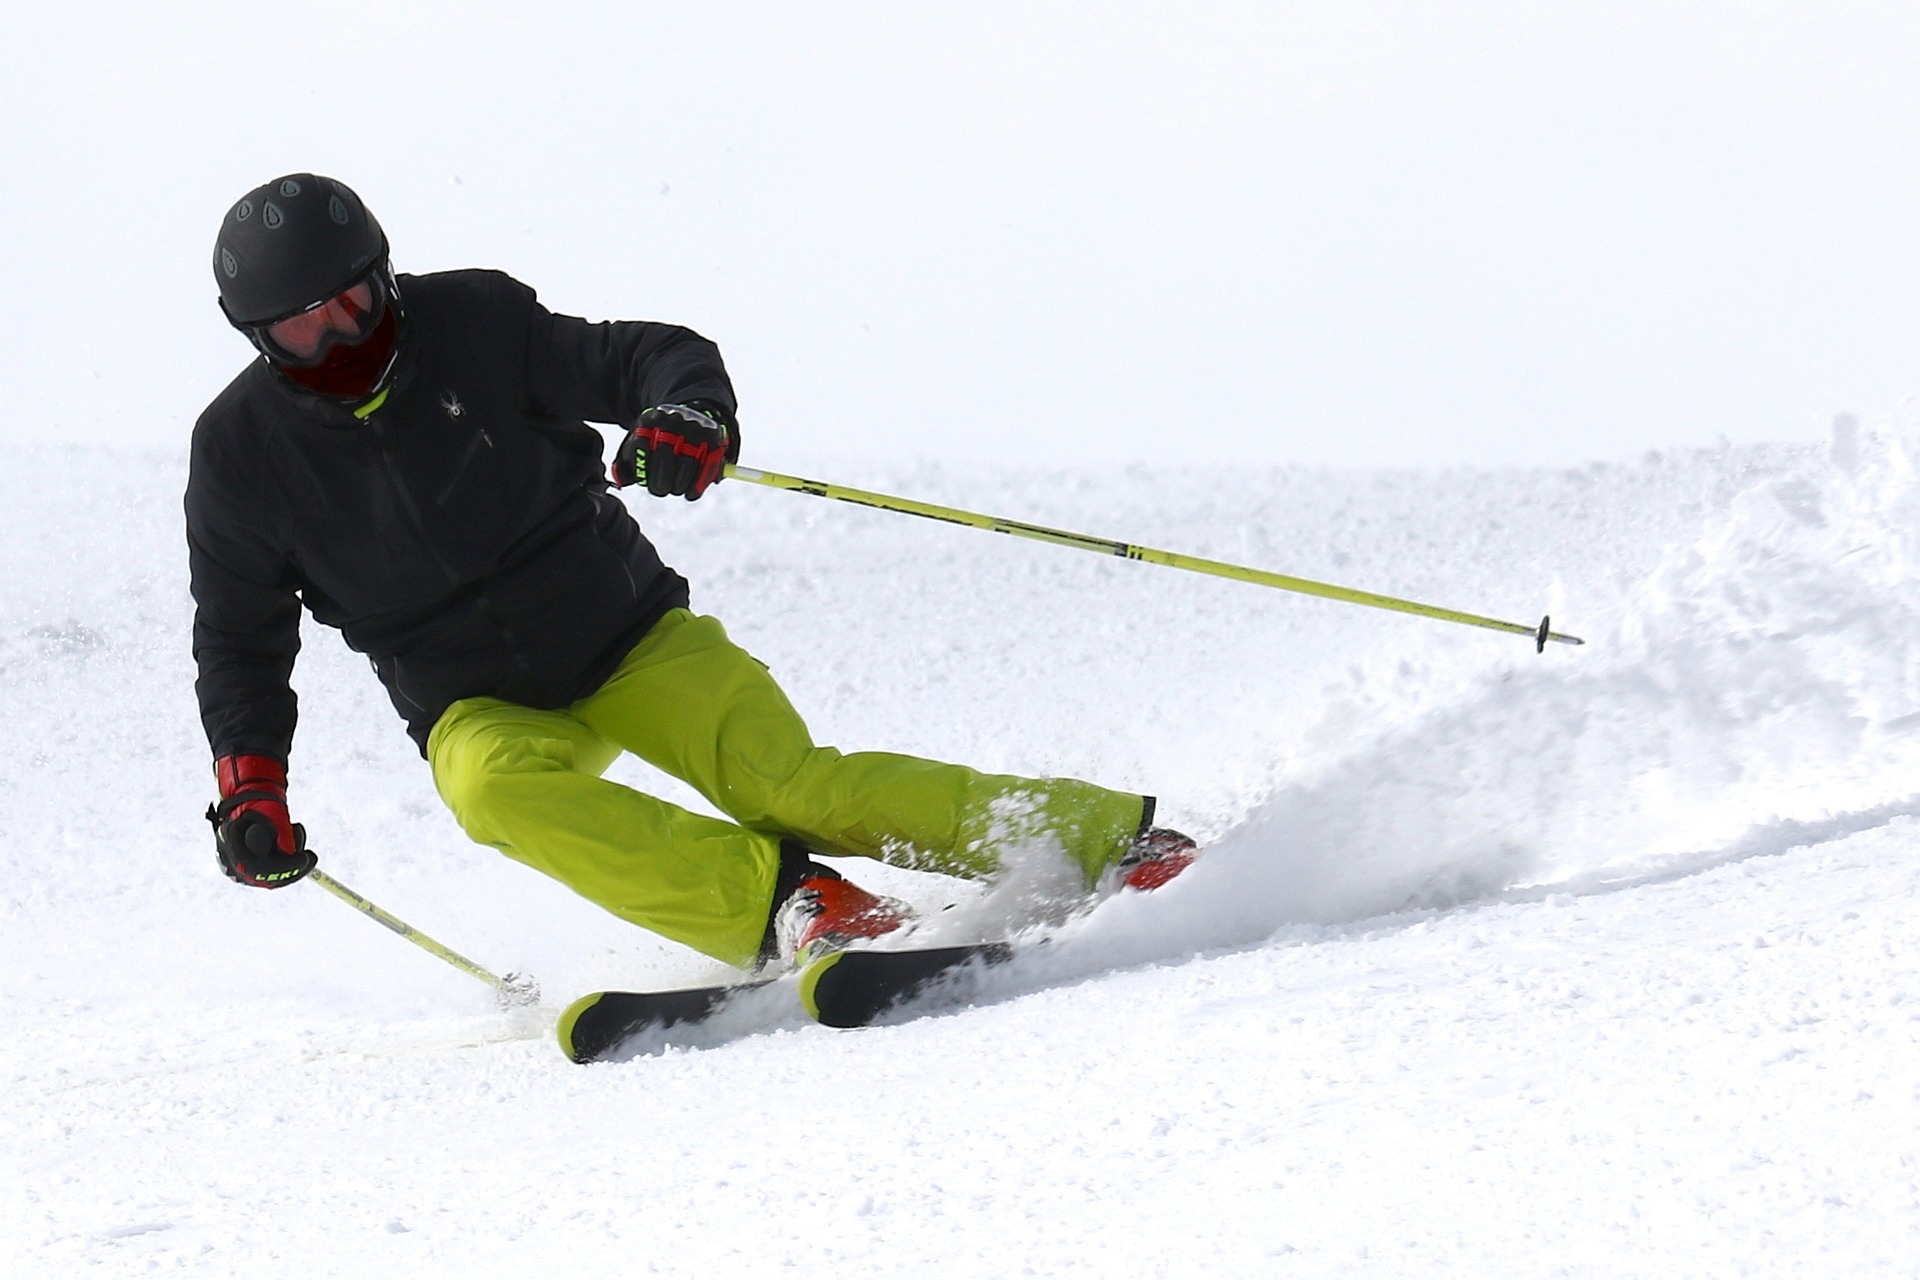 An advanced skier enjoying one of the tougher Park City ski trails.